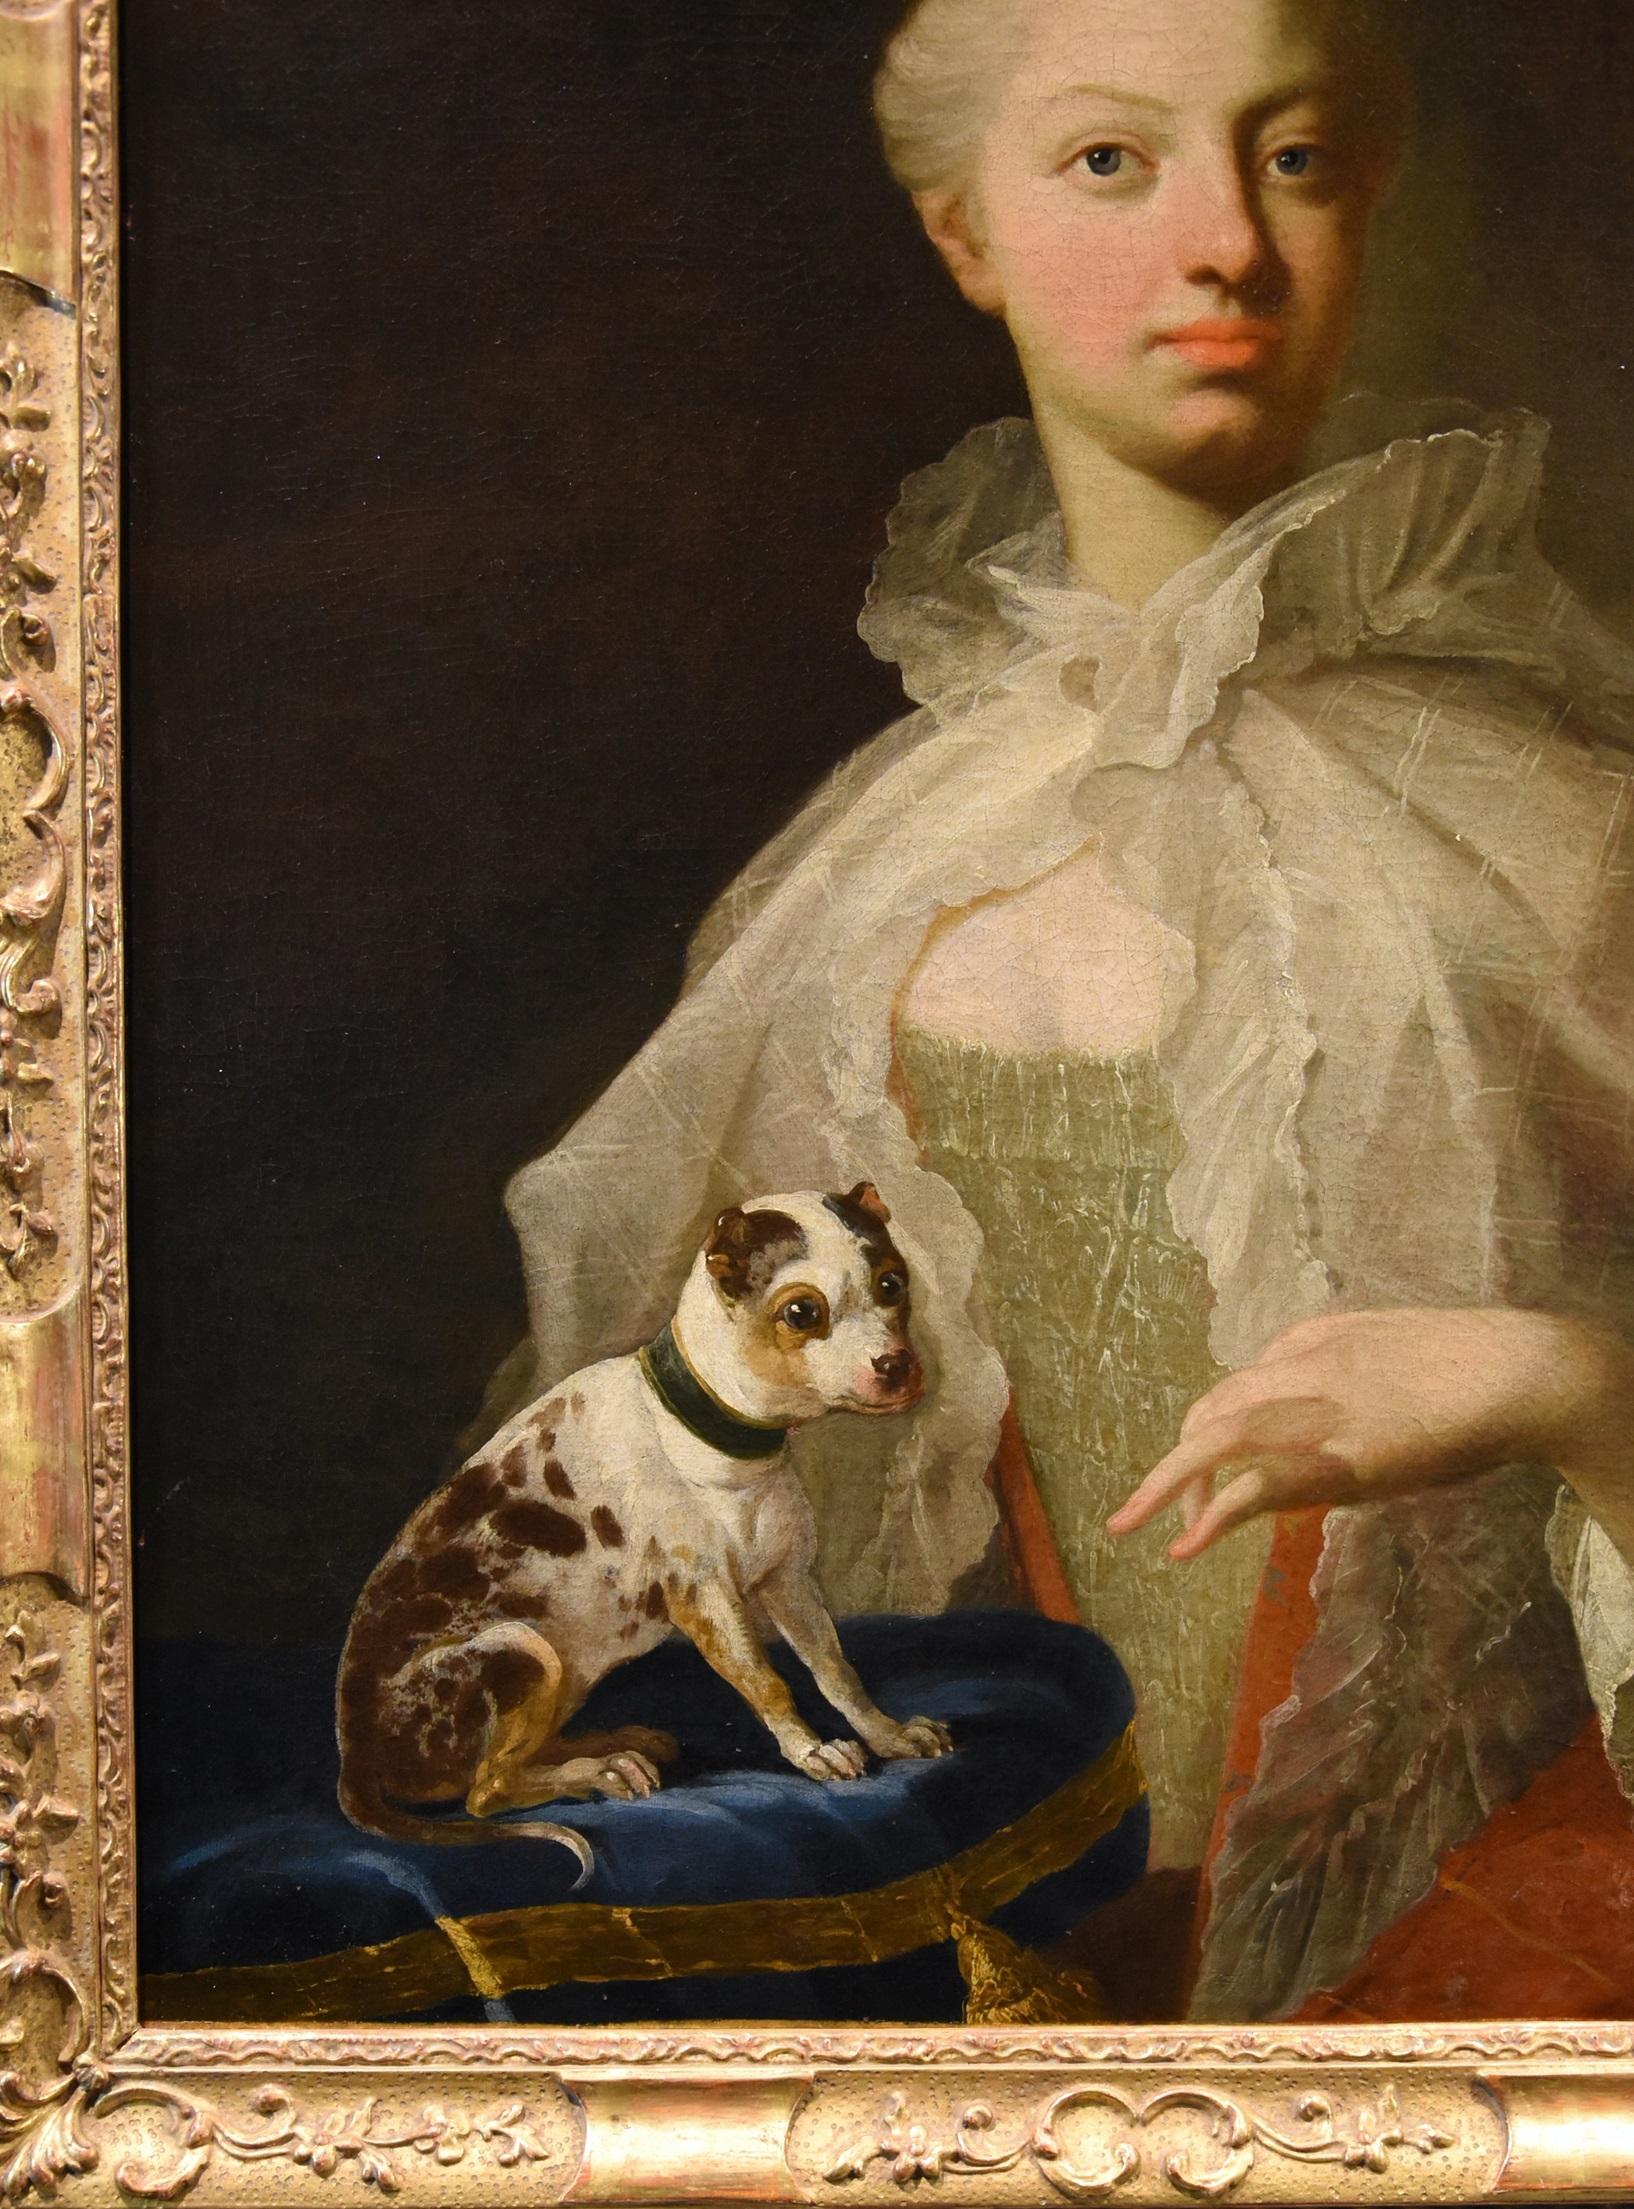 Louis Michel van Loo (Toulon 1707- Paris 1771) attributable
Portrait of a noblewoman with her little dog
Oil on canvas (79 x 66 cm. - with frame 92 x 78 cm.) 

A qualitative portrait depicting an elegant noblewoman of French origin, presumably